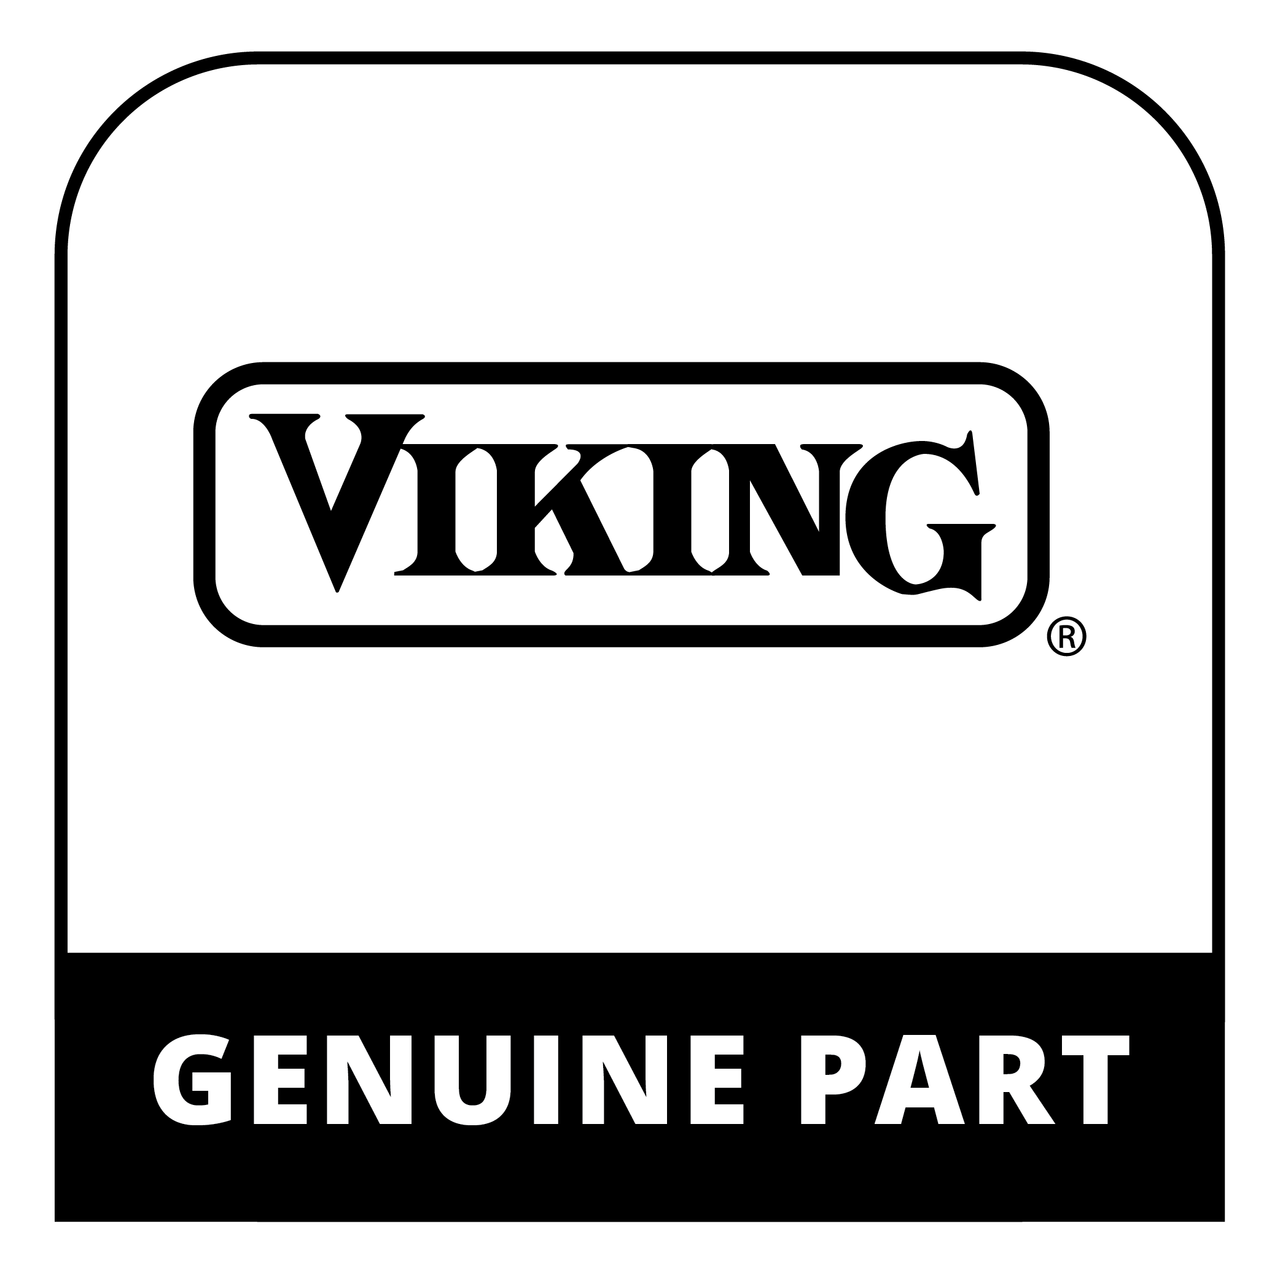 Viking 022210-000 - TOP COVER ASSYMBLEY - Genuine Viking Part